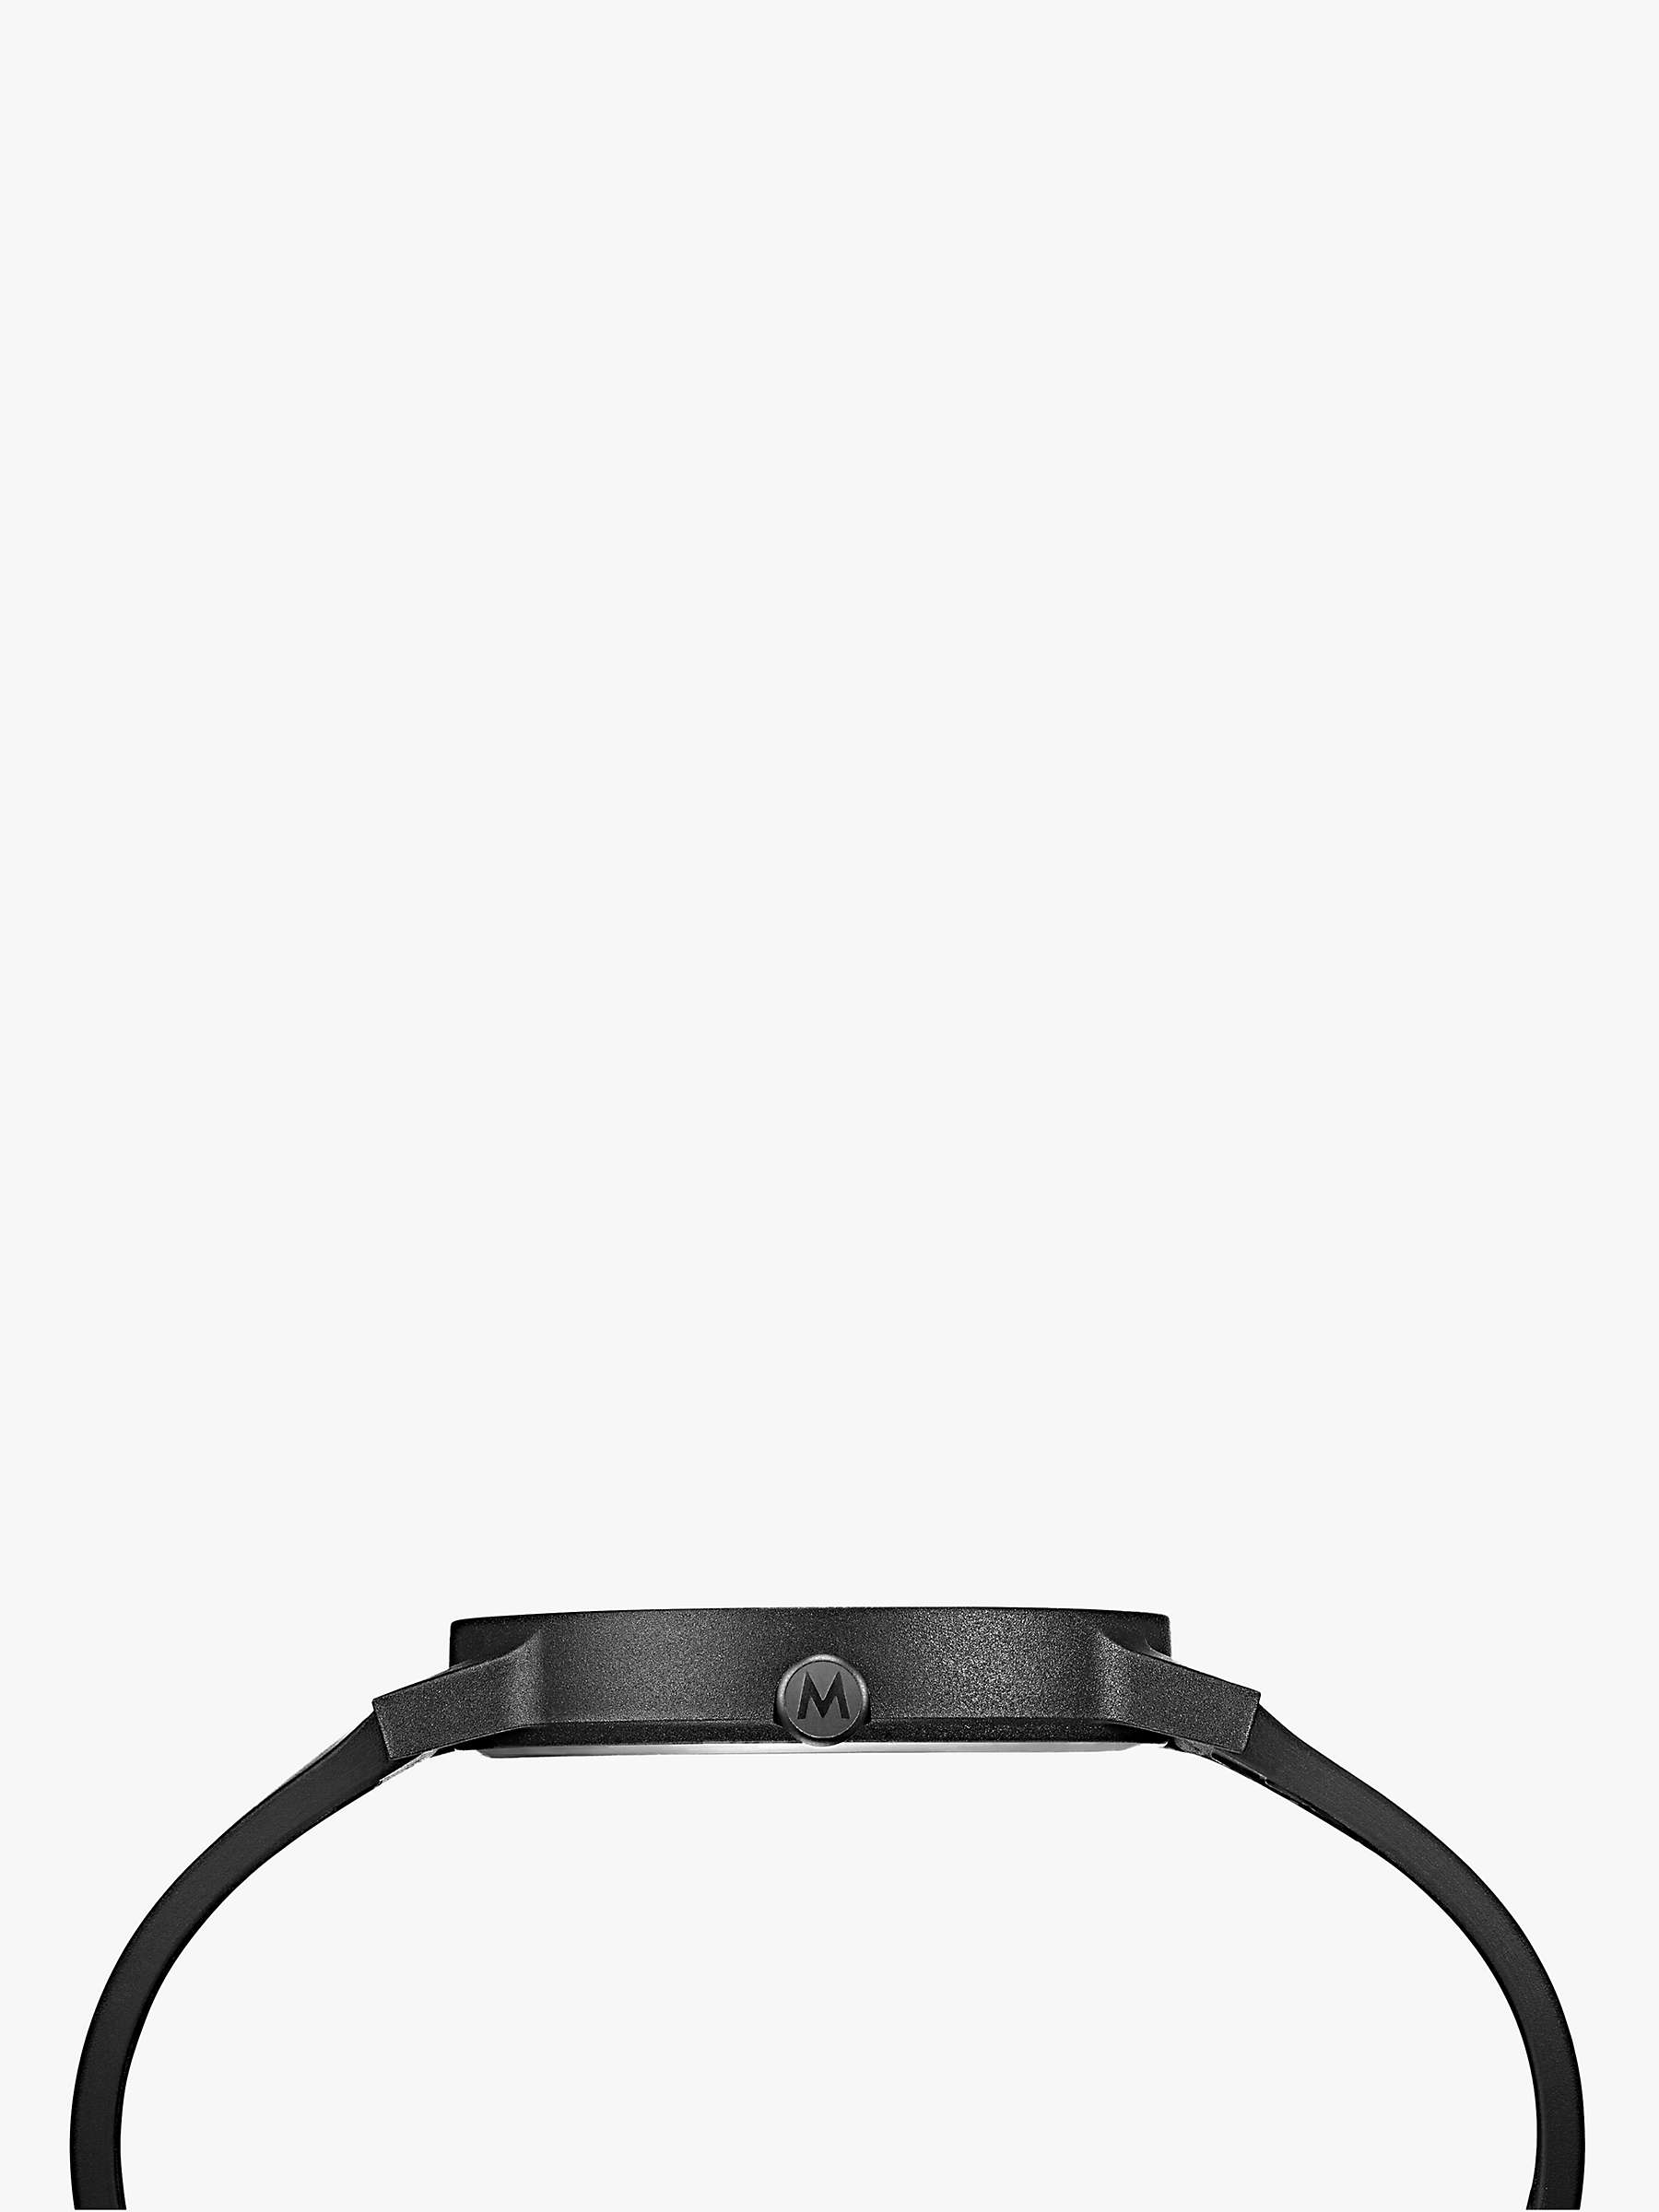 Buy Mondaine Unisex Essence Rubber Strap Watch, Black/White MS1.41110.RB Online at johnlewis.com